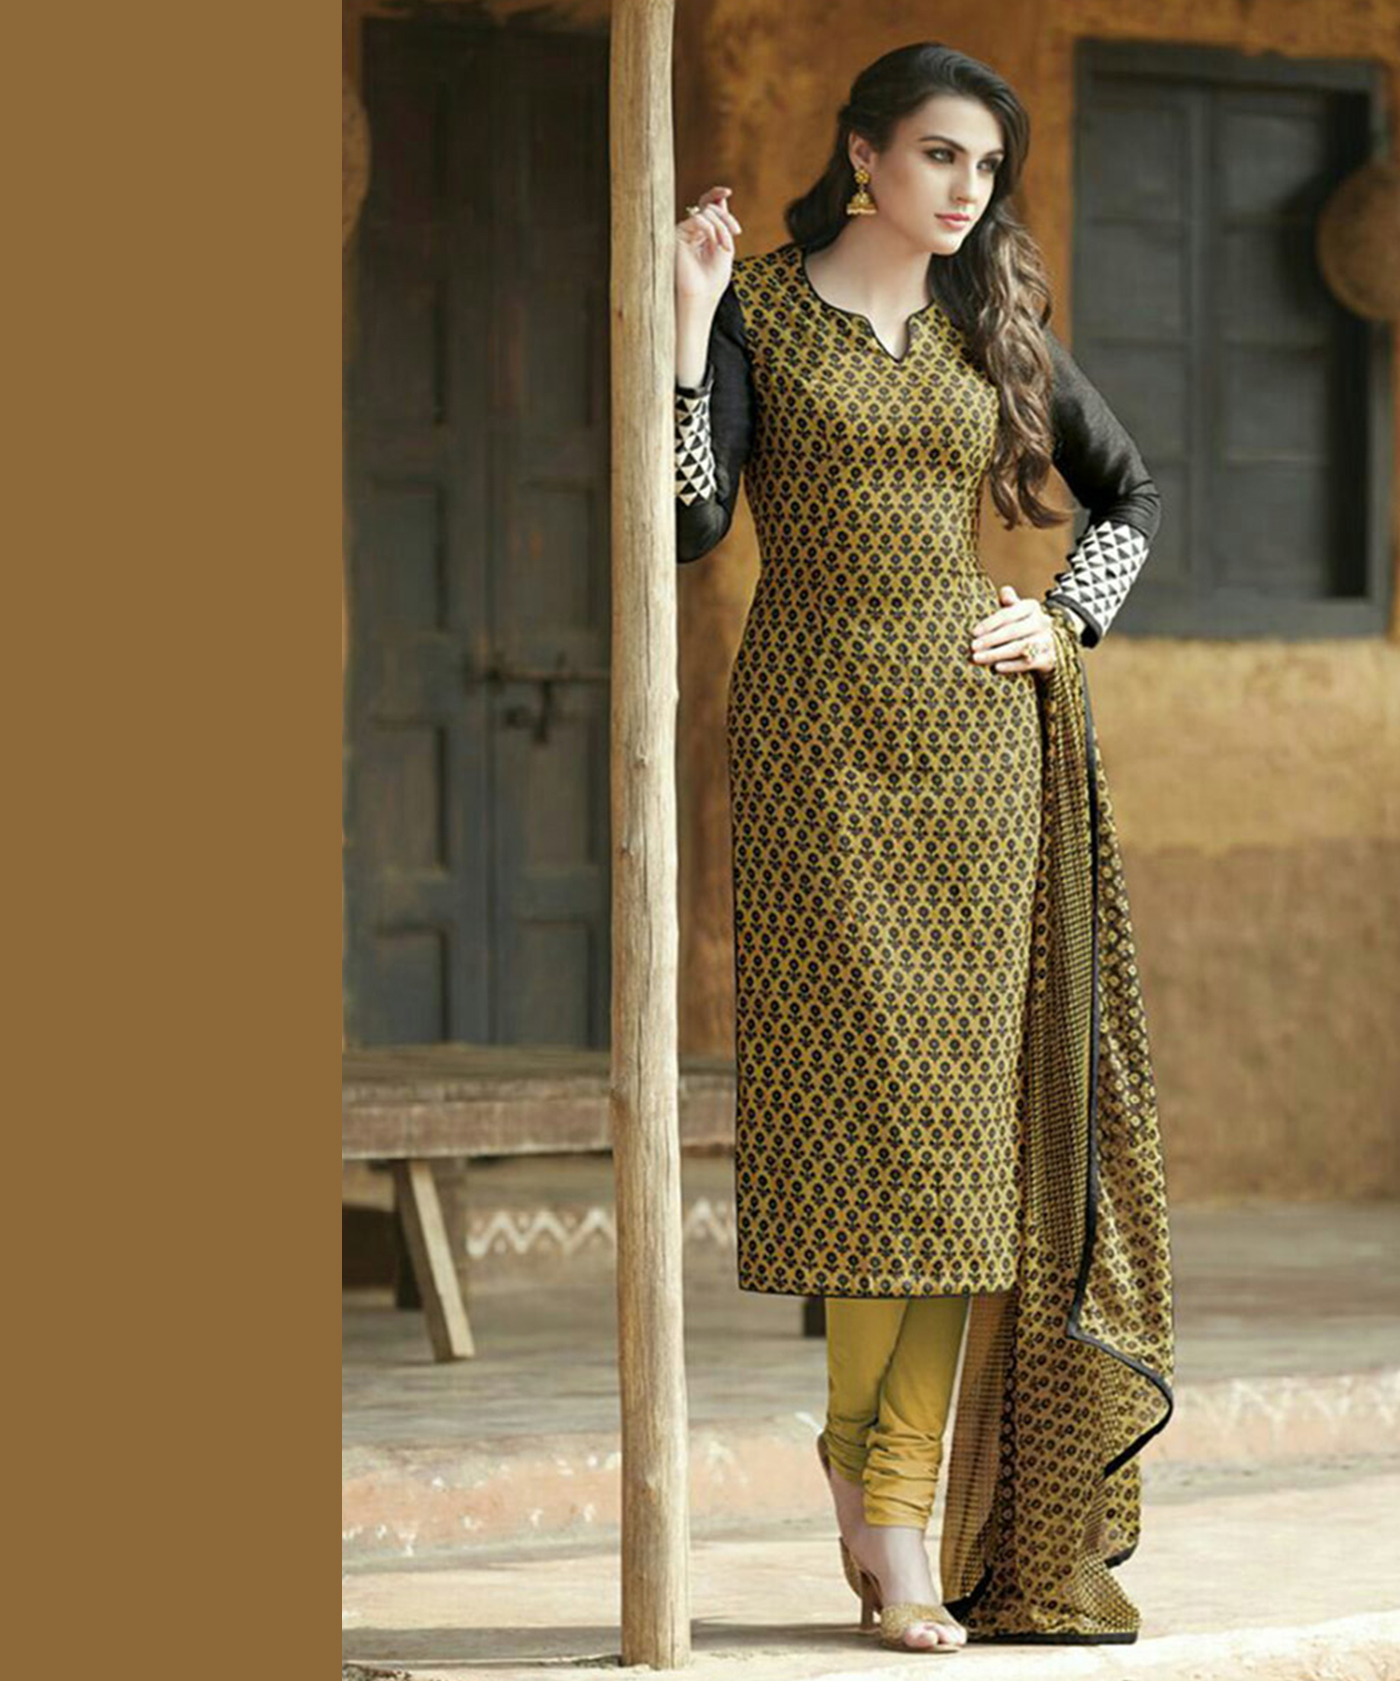 Maroon and silver bhagalpuri silk dress - Of Indian Origin